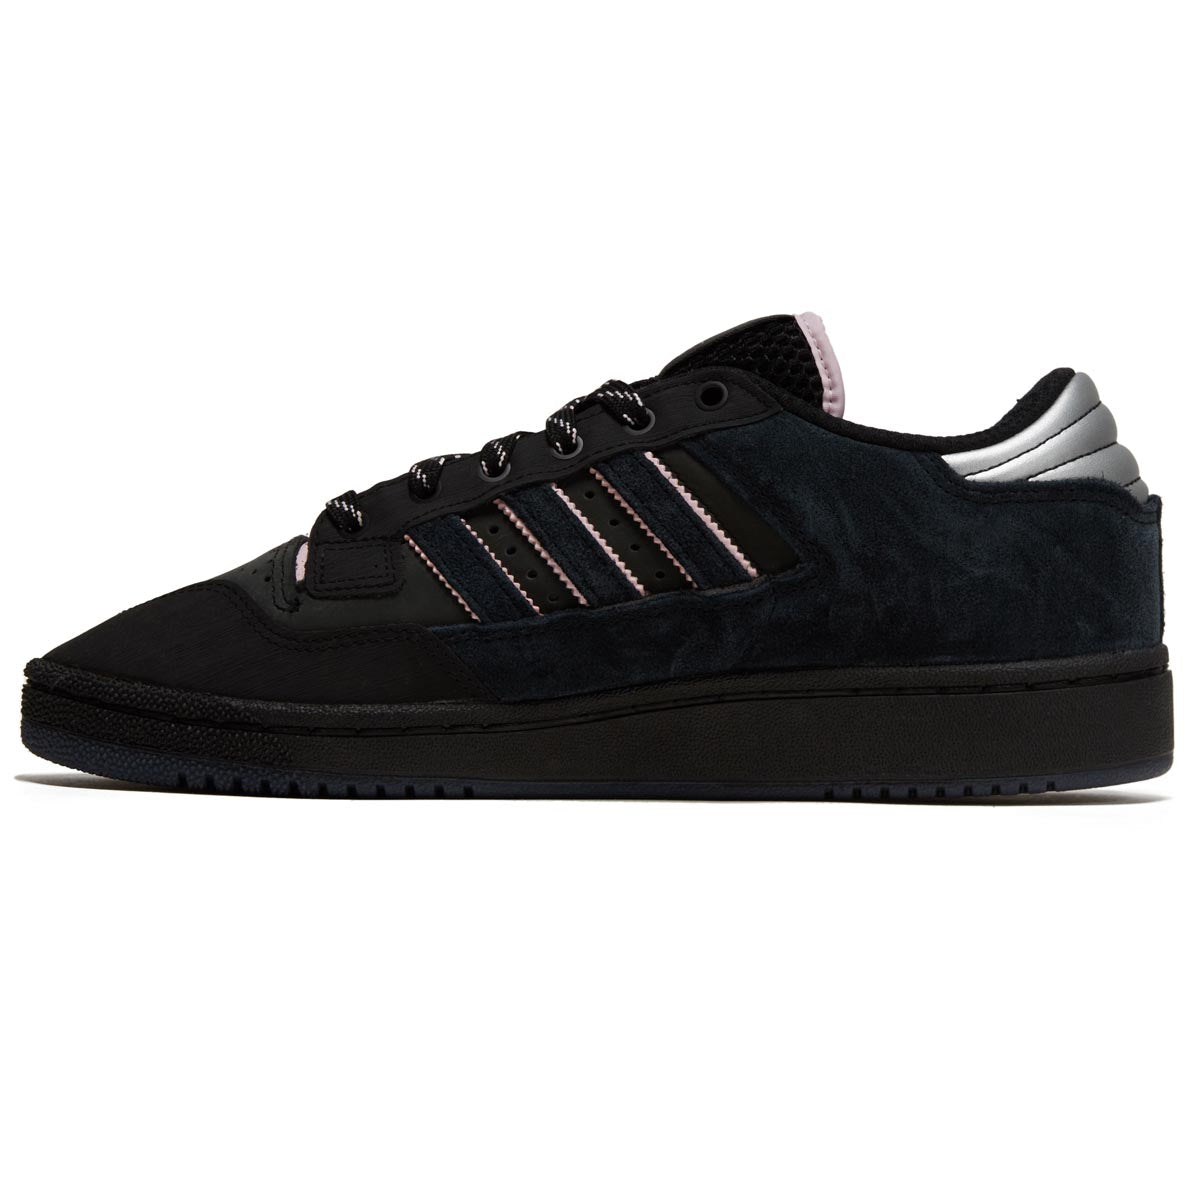 Adidas Centennial 85 Lo ADV x Dre Shoes - Core Black/Clear Pink/Core Black image 2